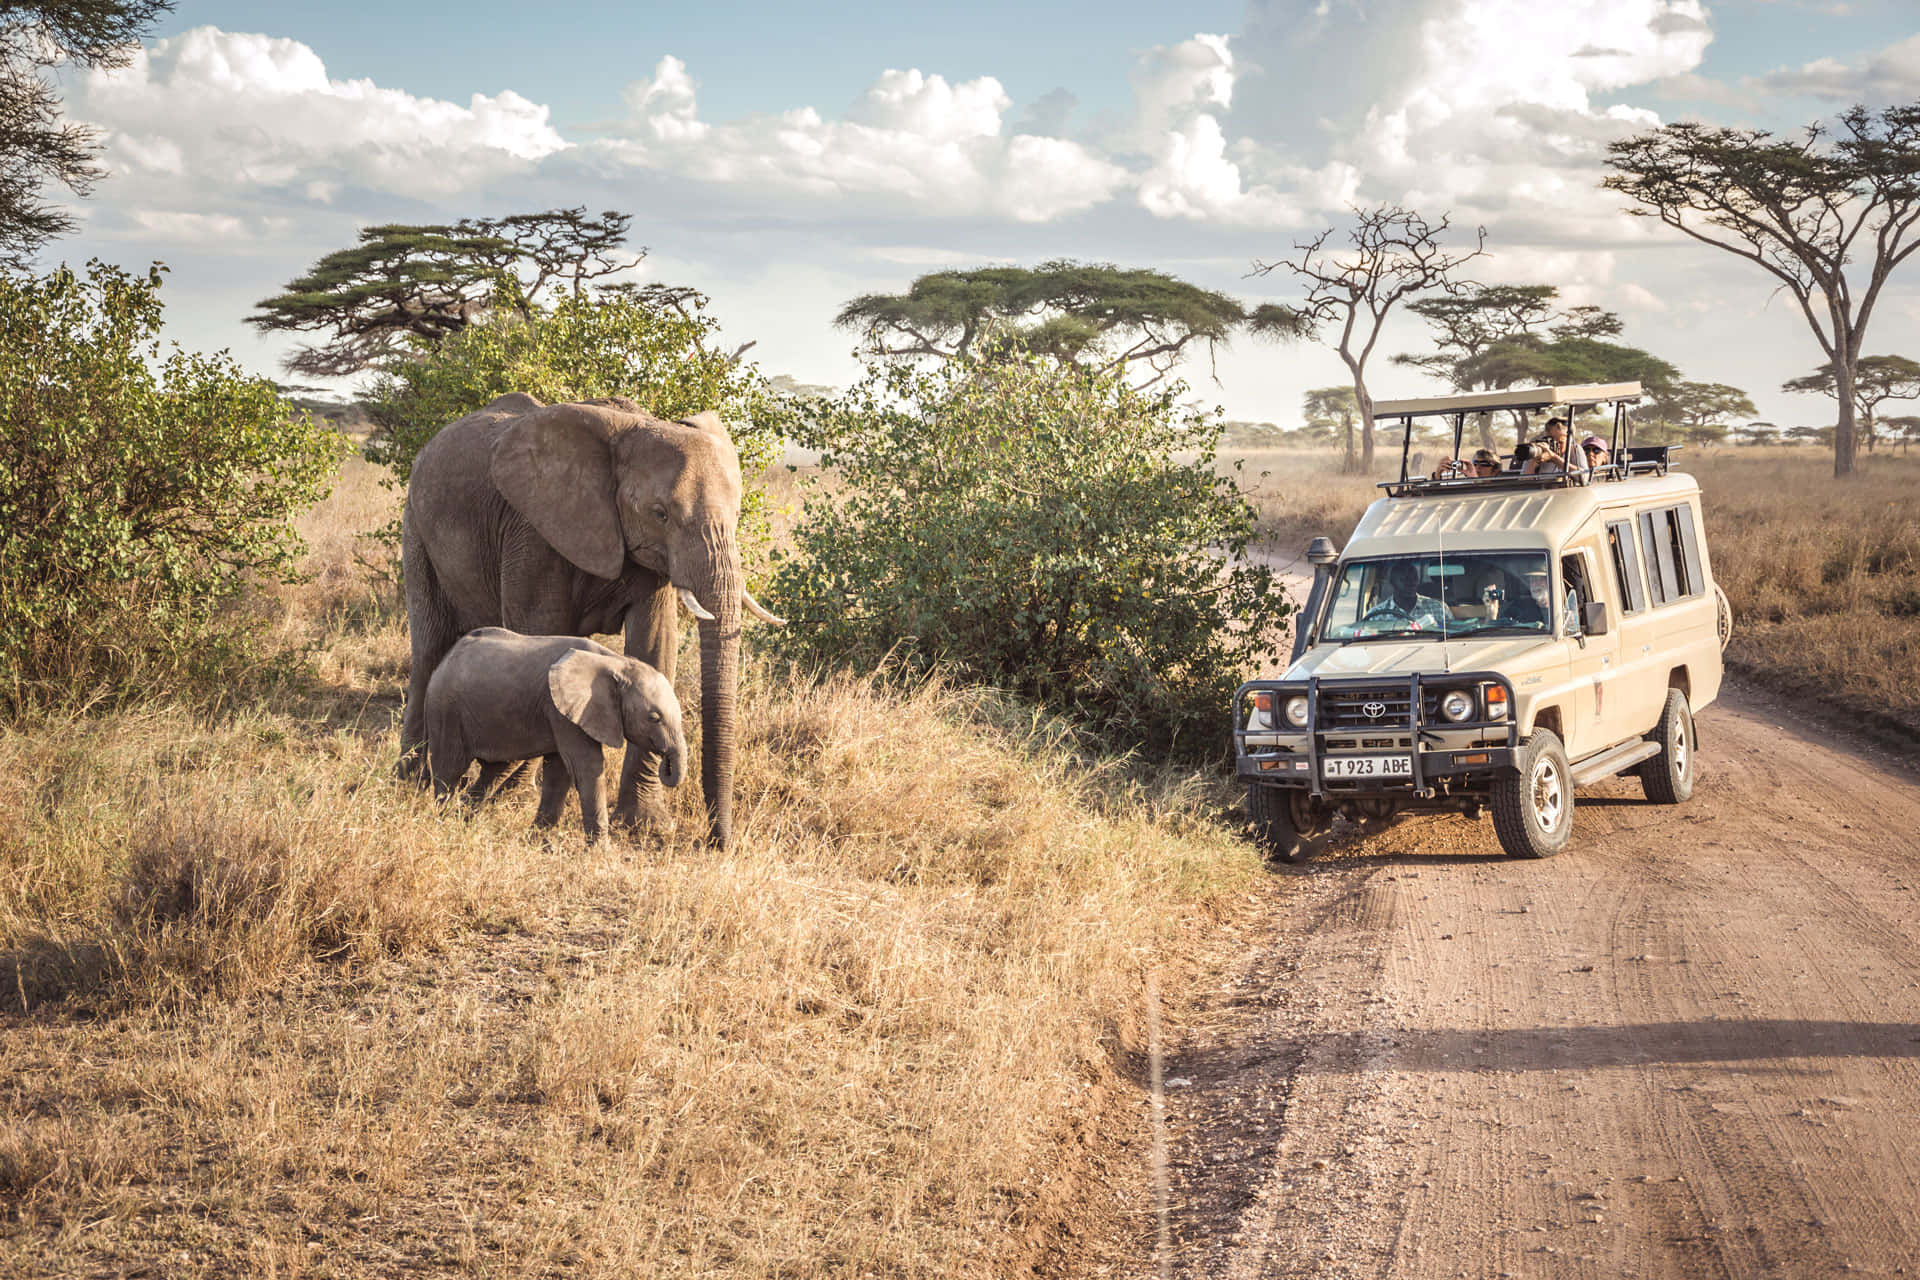 Serengeti National Park Safari Vehicle Close To Elephants Wallpaper